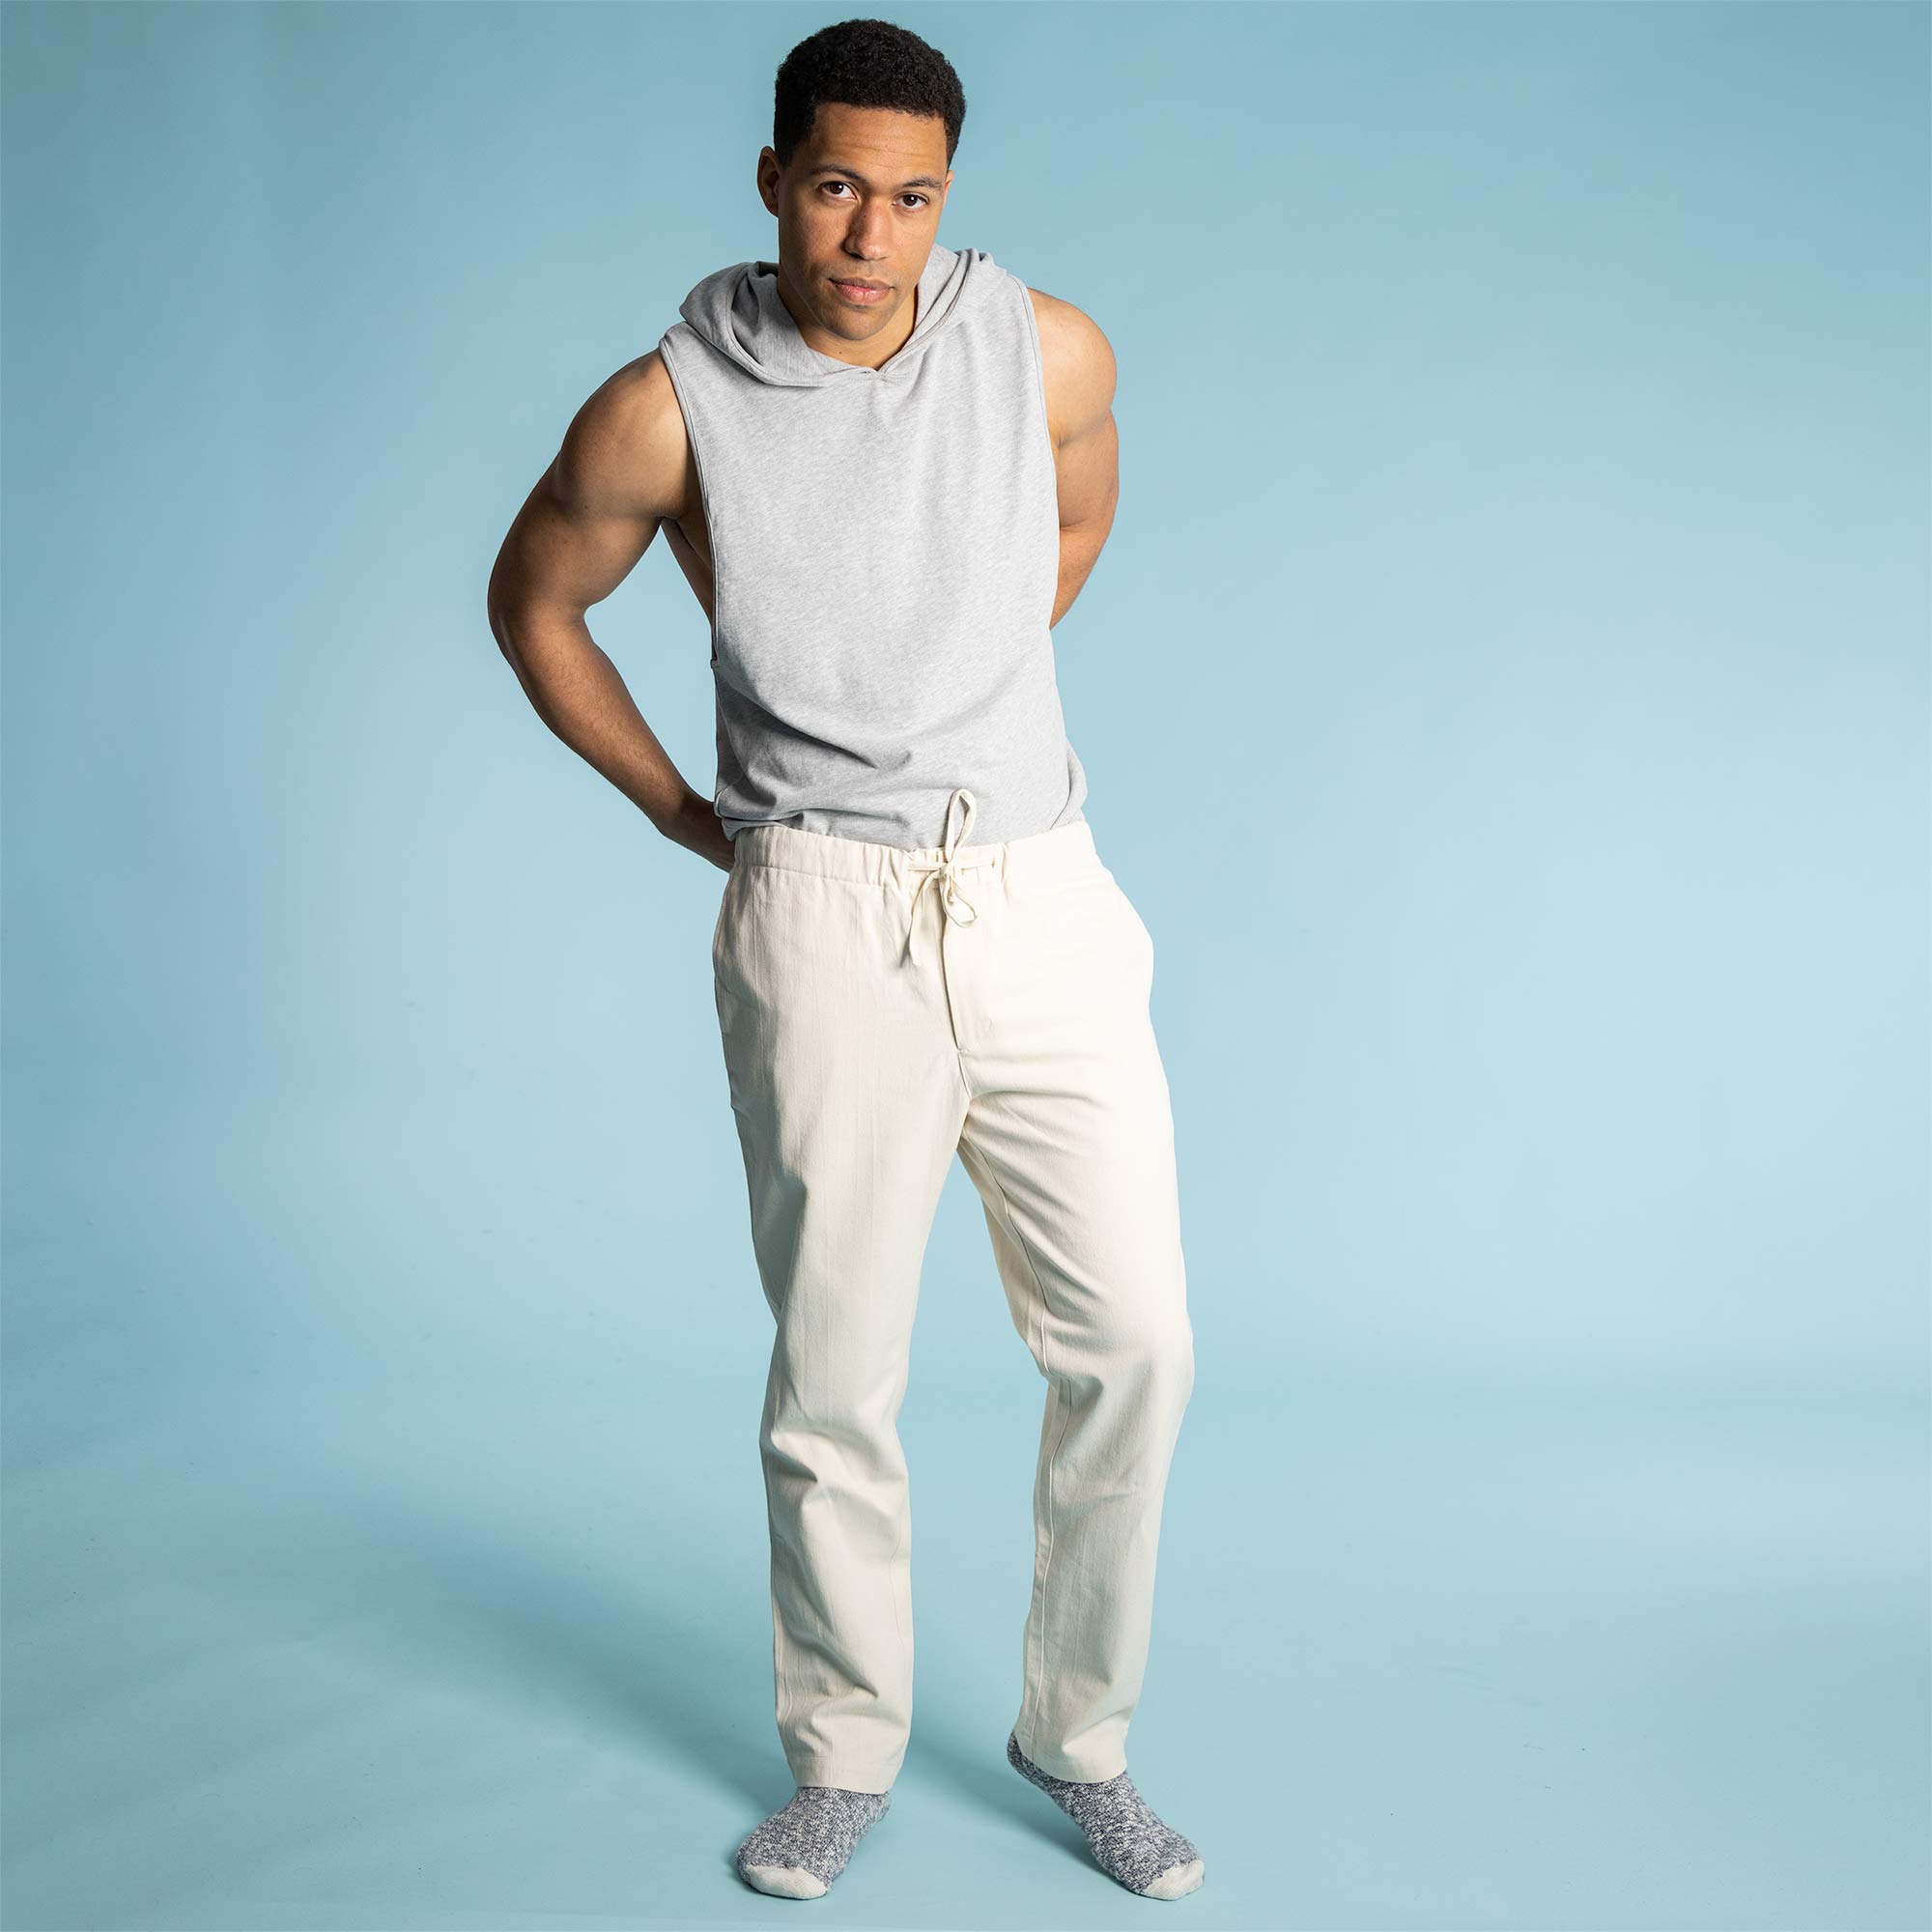 Cozy Joggers Organic Cotton Fleece Pants With Pockets Street Style  Sweatpants -  Norway